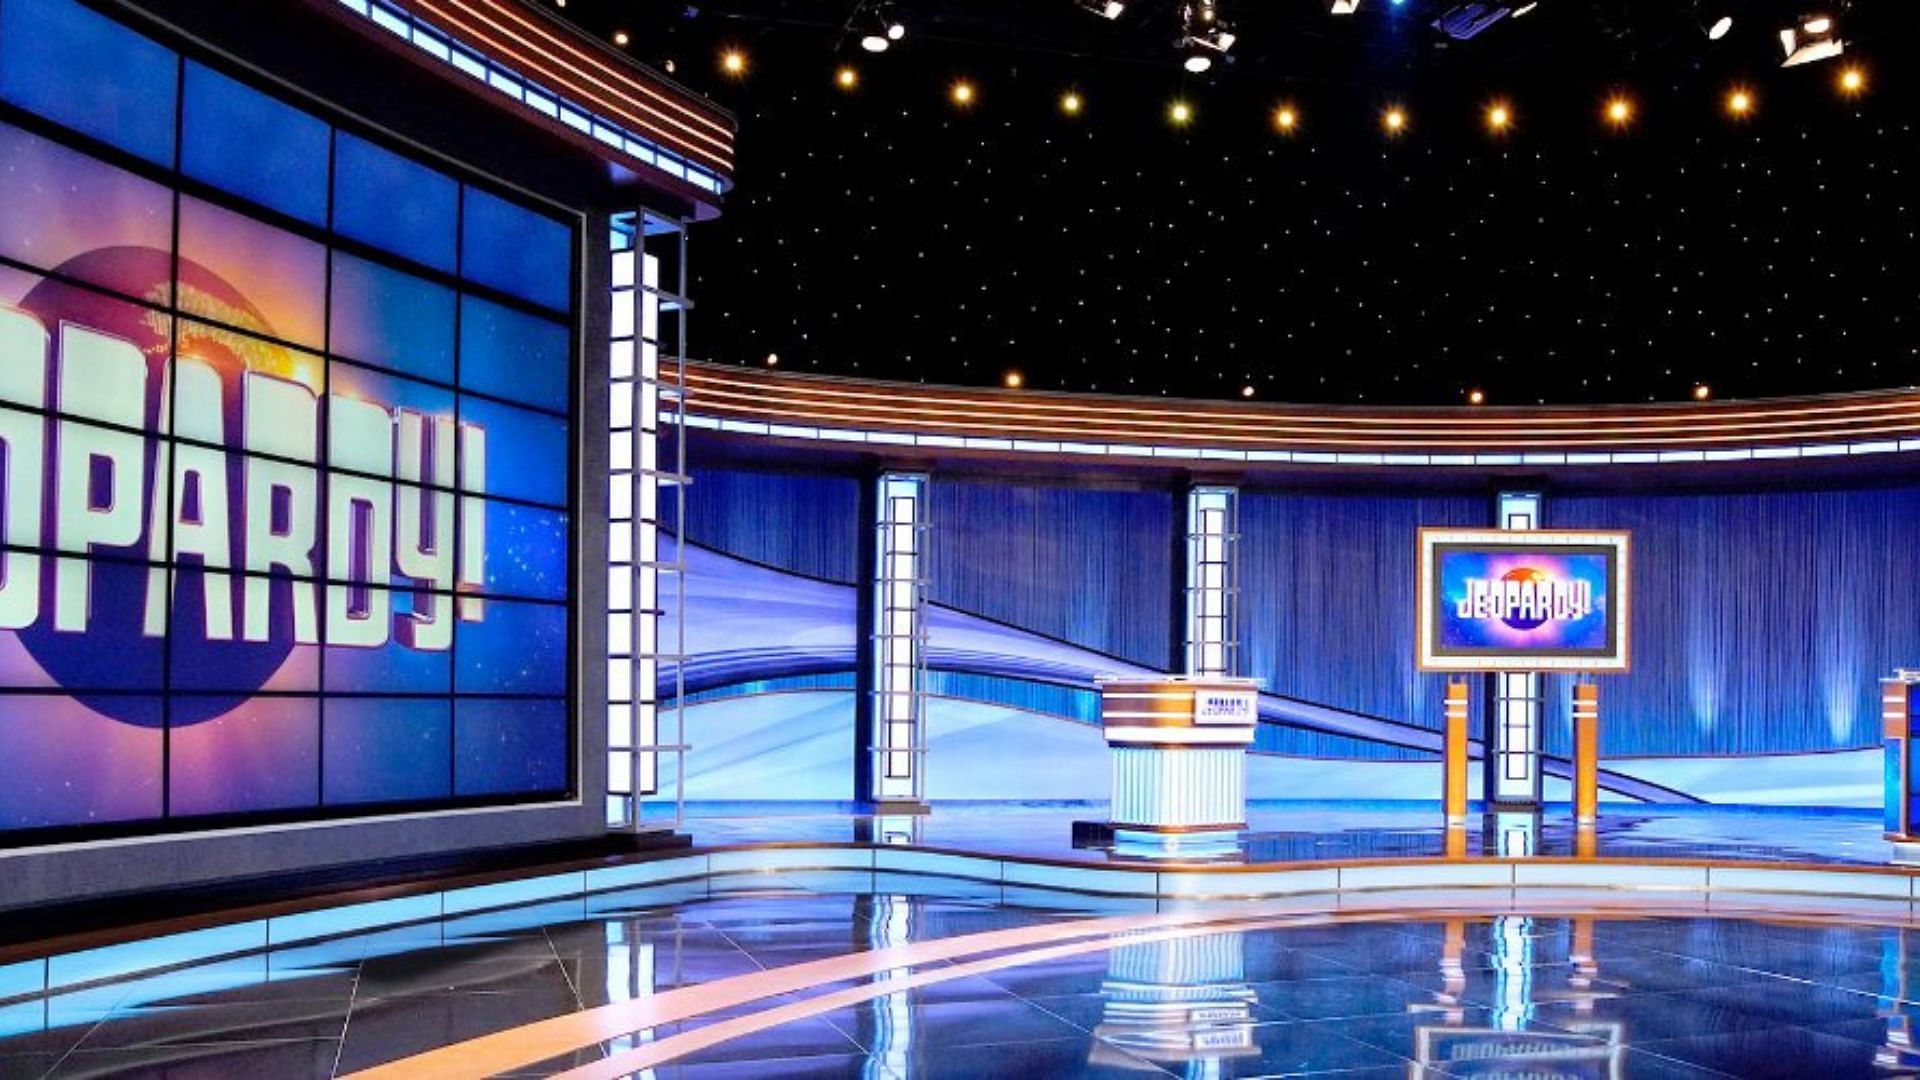 Who won Jeopardy! tonight? June 14, 2022, Tuesday